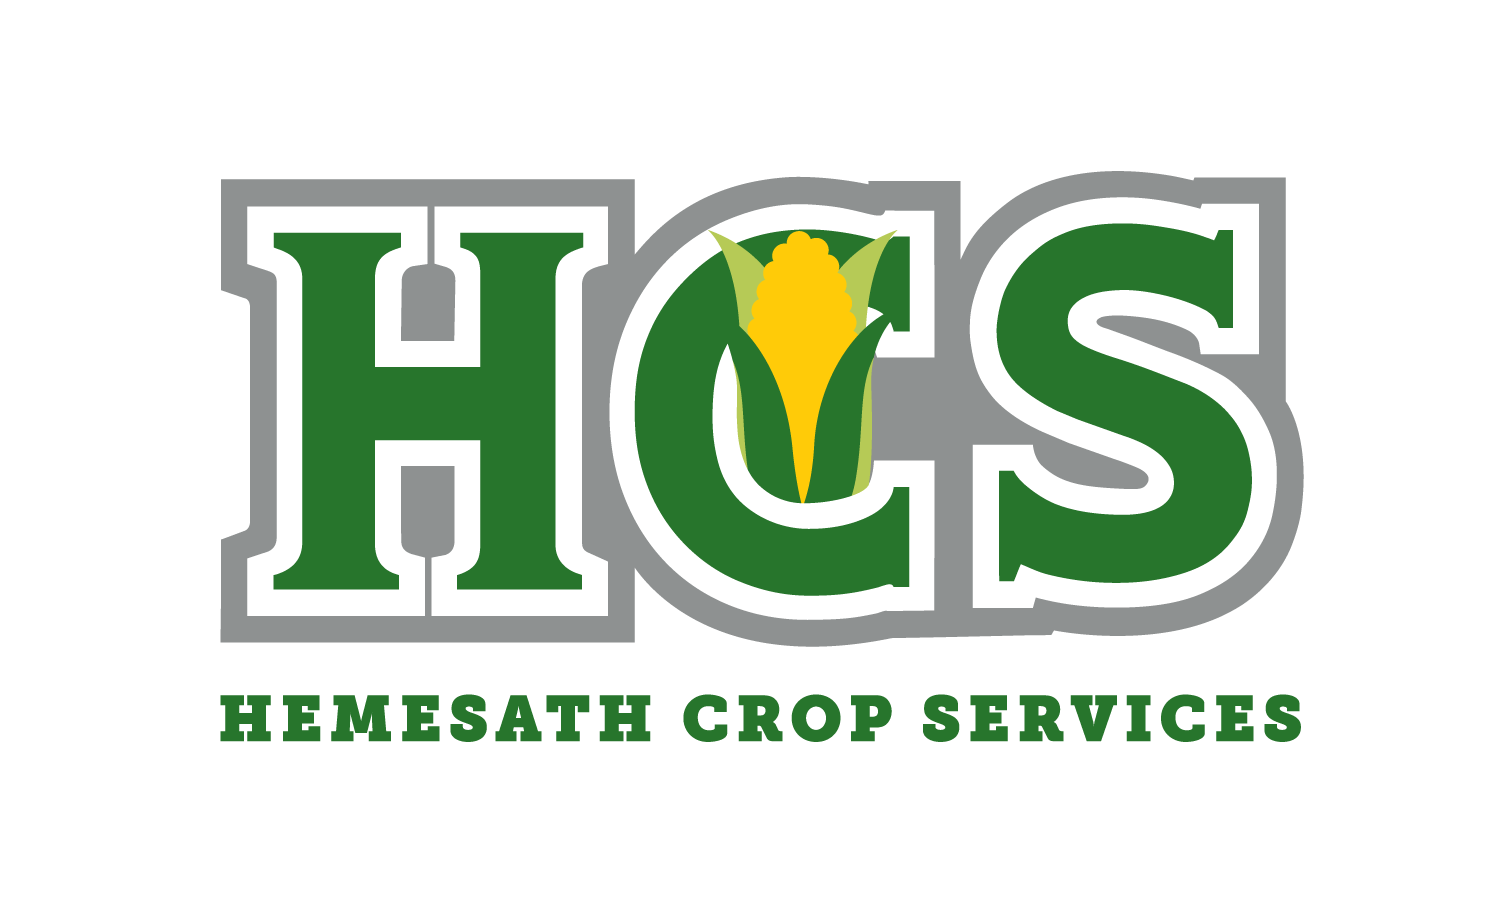 Hemesath Crop Services